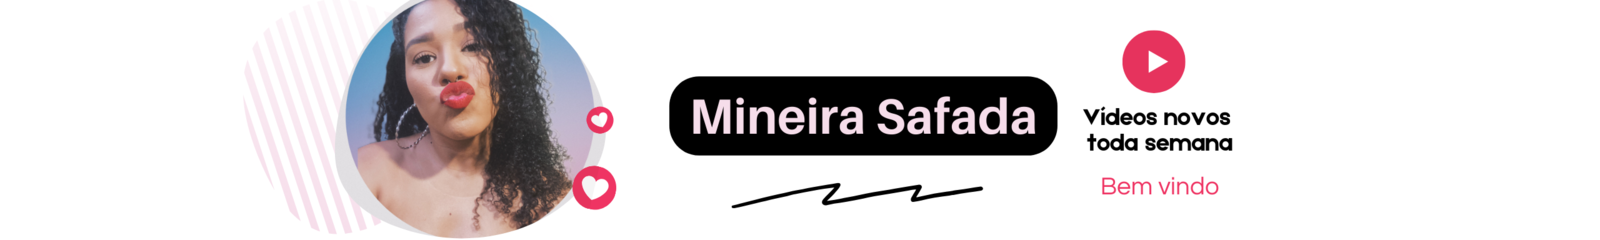 Mineira Safada